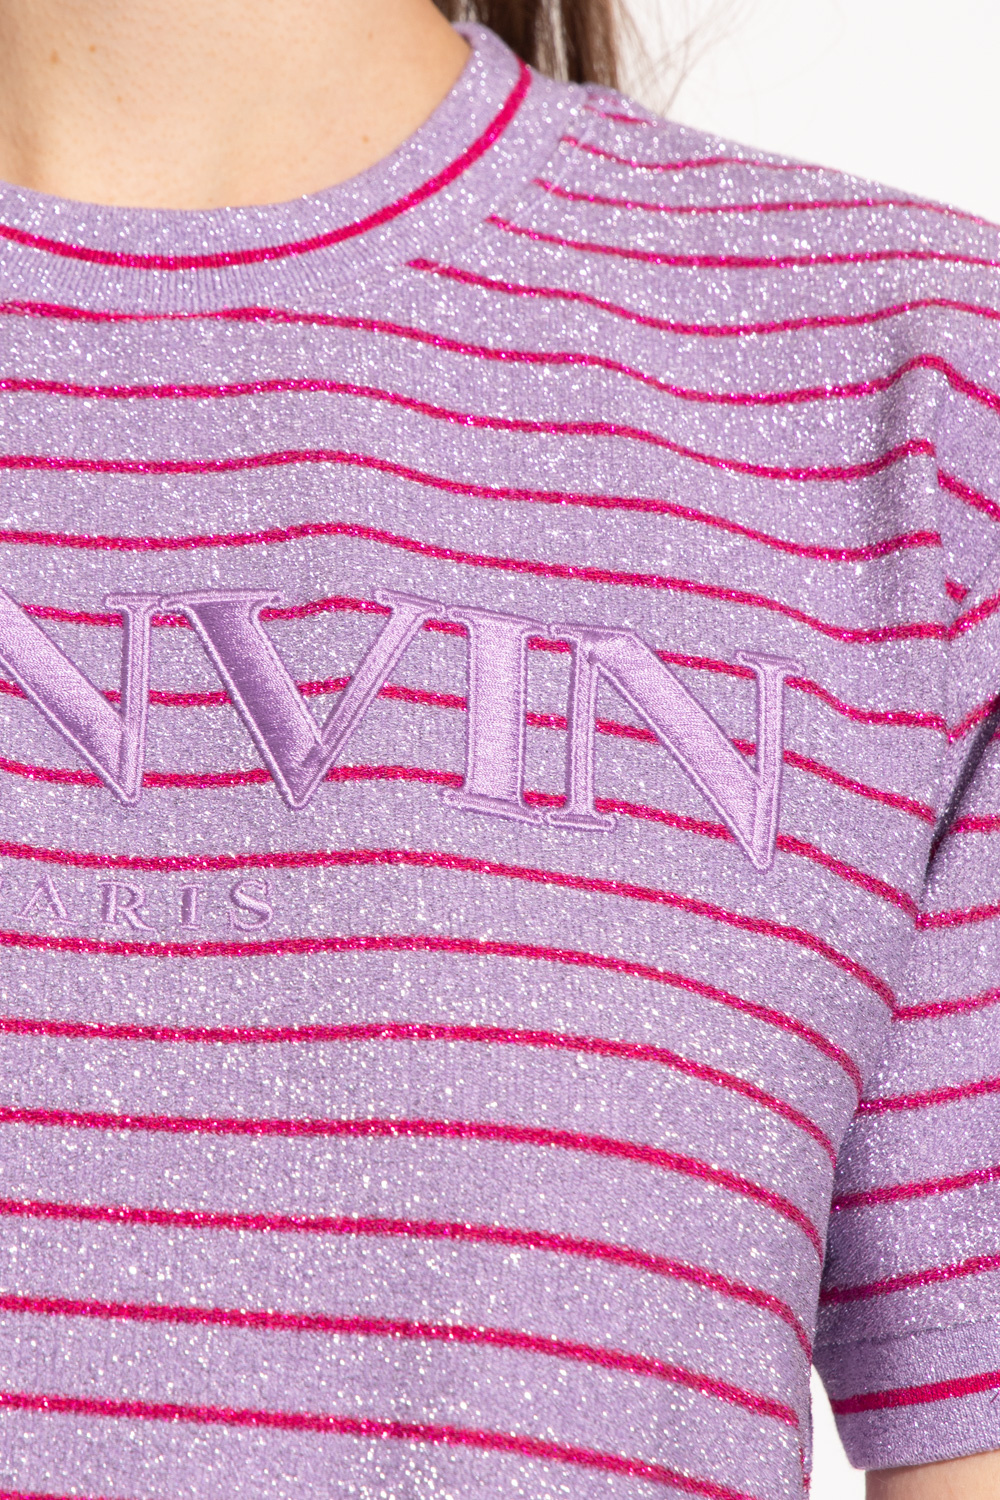 Lanvin T-shirt motif with lurex threads